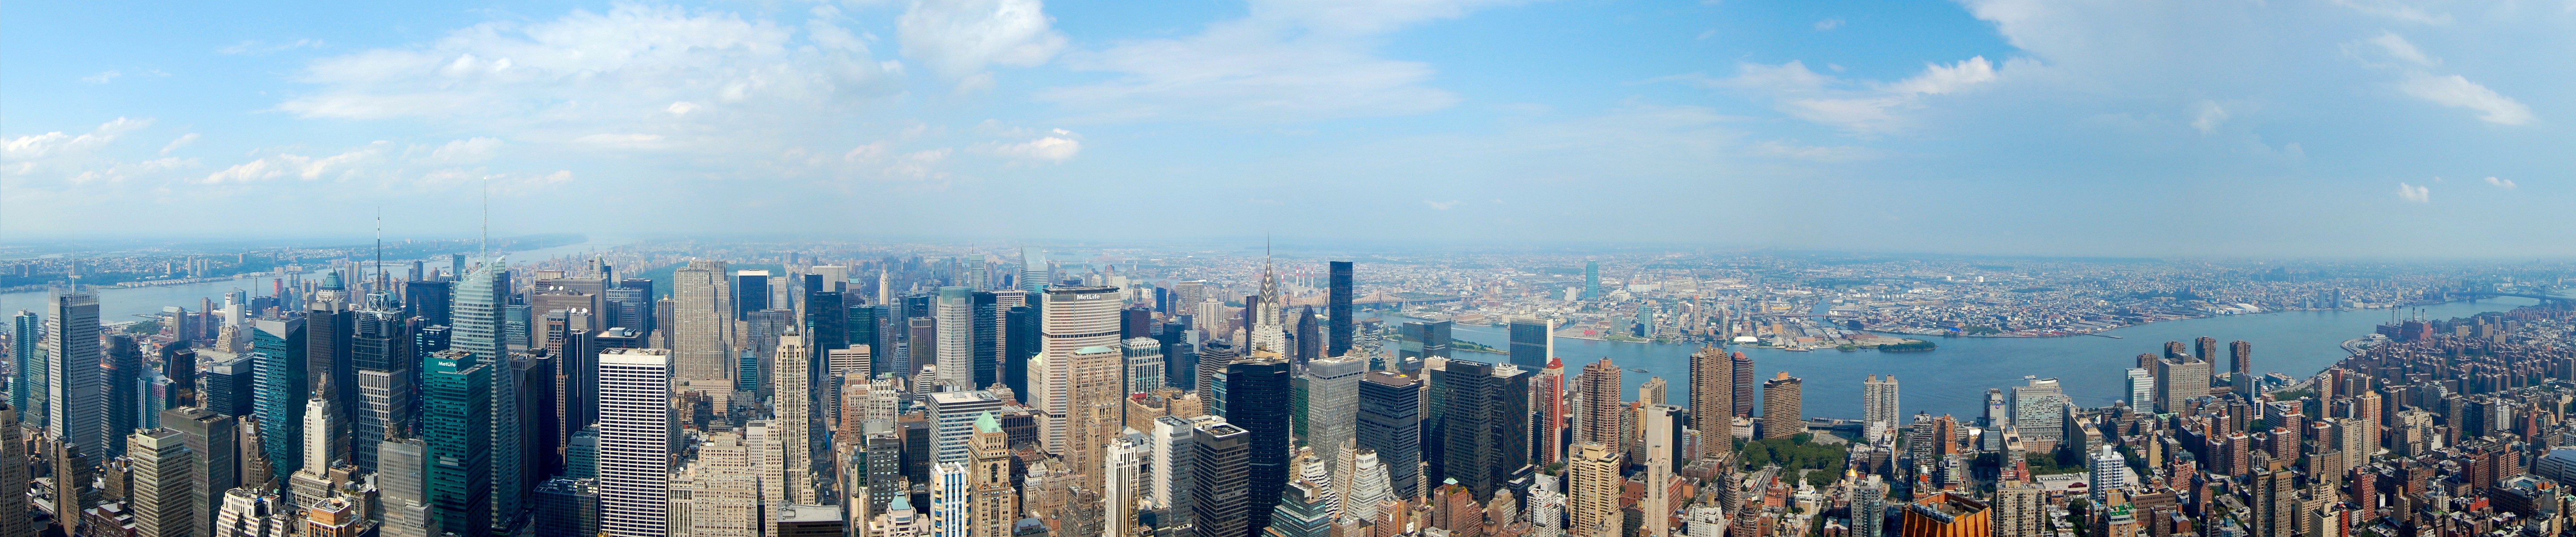 General 5760x1200 New York City triple screen wide angle cityscape Manhattan skyscraper panorama USA